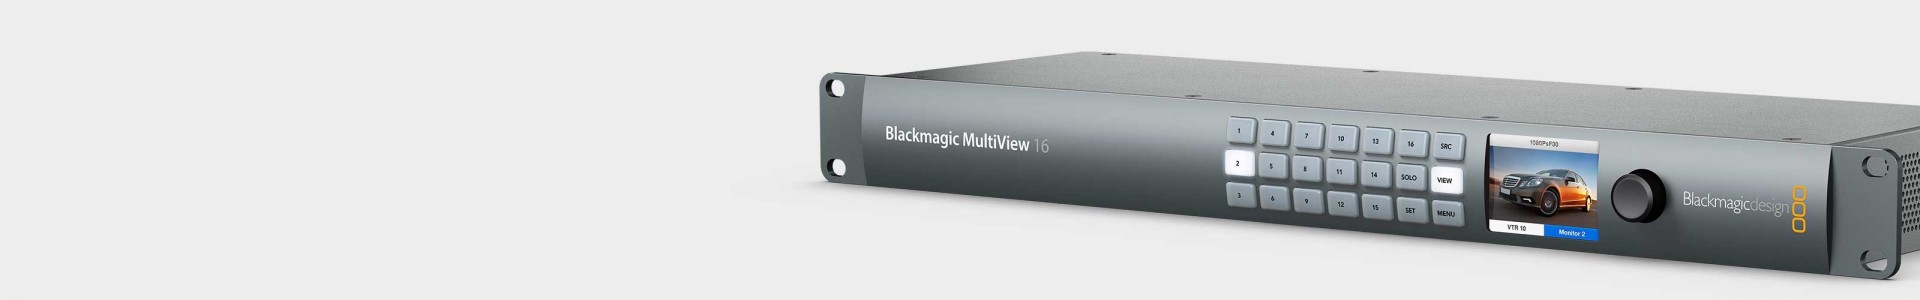 BLACKMAGIC Multiviewer Generators - Avacab official dealer